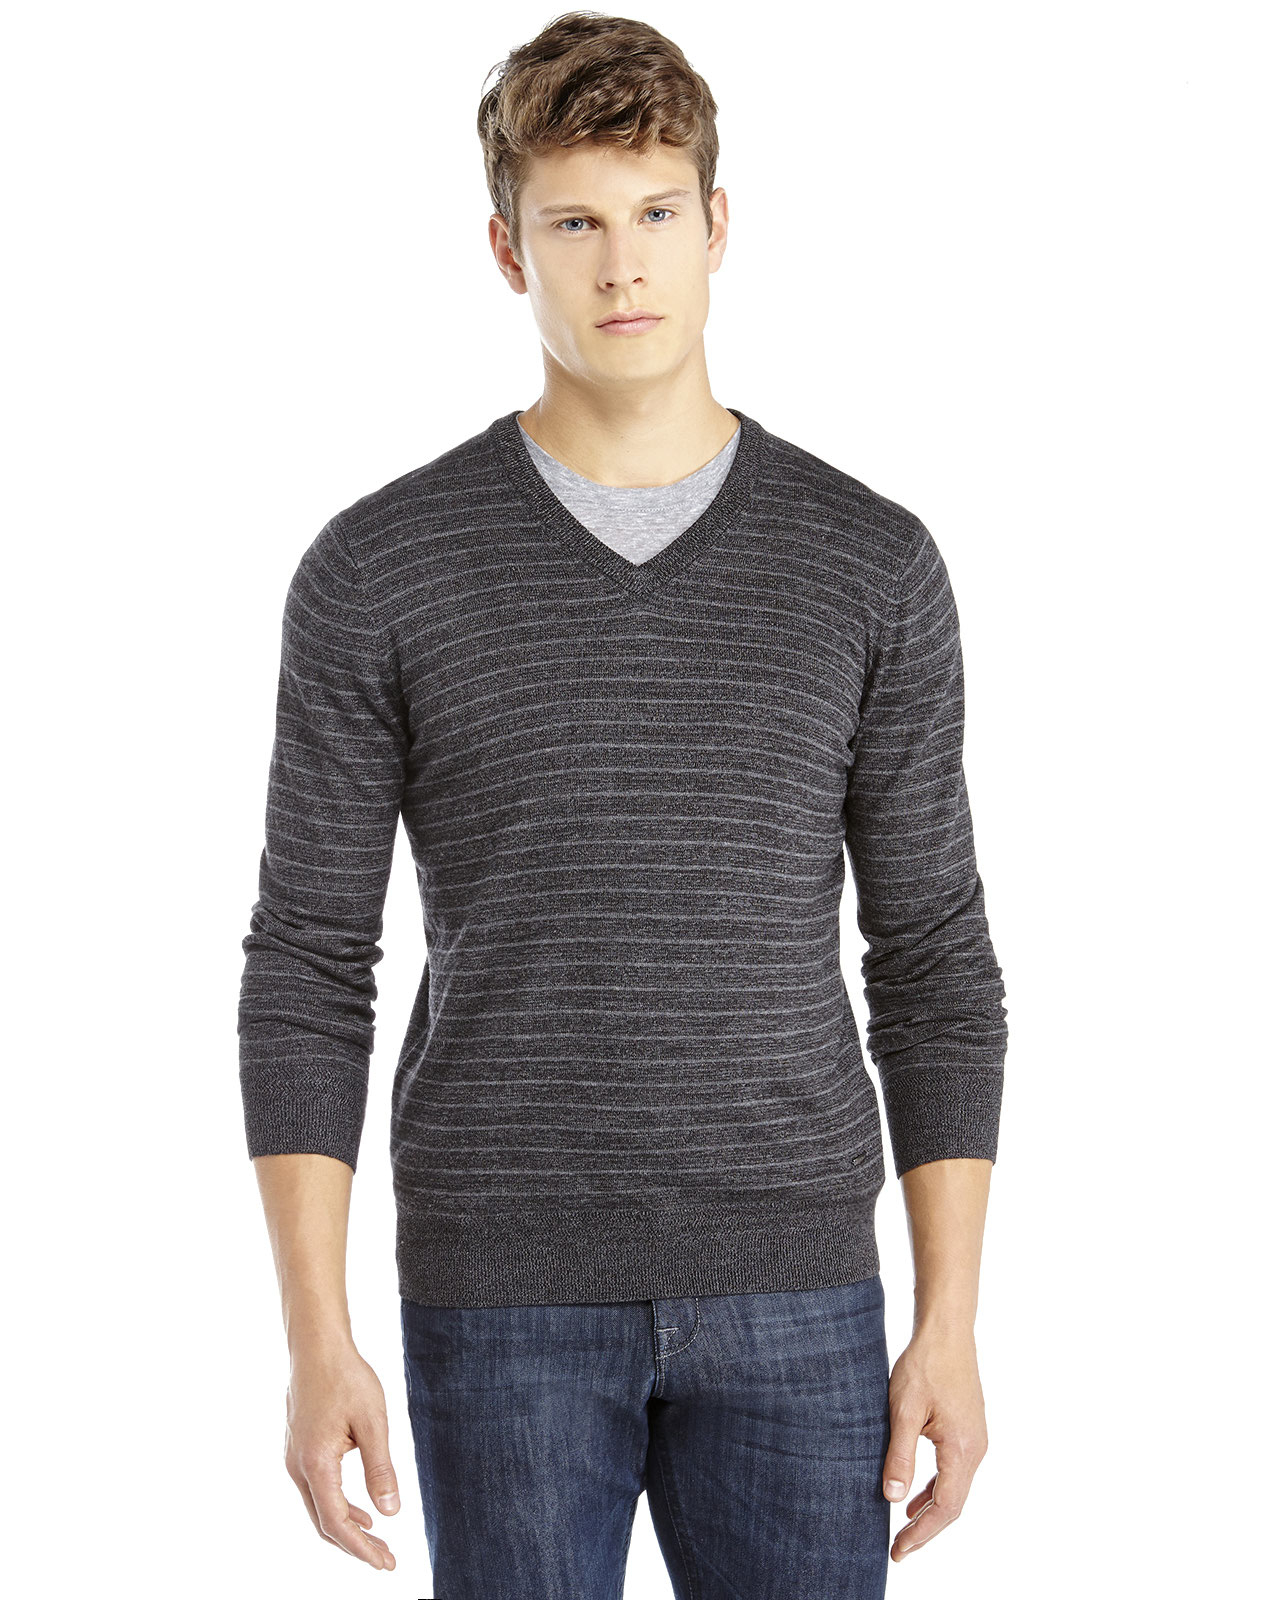 Lyst - Dkny V-Neck Stripe Marled Knit Sweater in Gray for Men